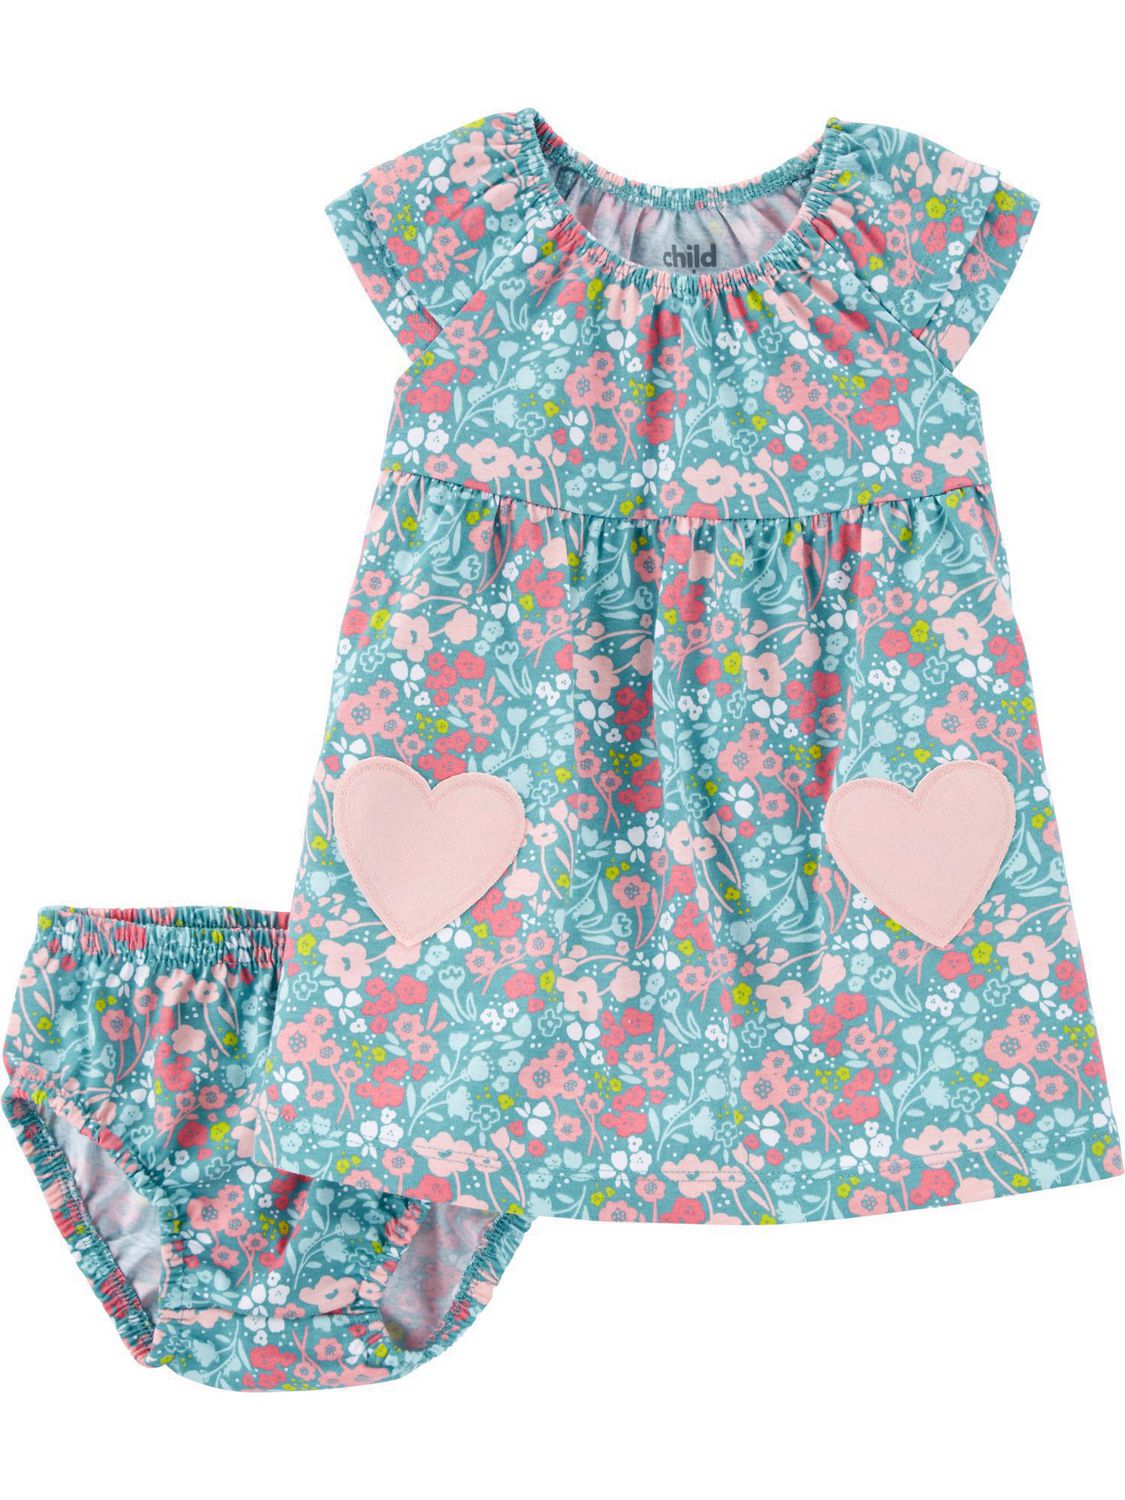 Child of Mine by Carter's Infant Girls Dress- Mint | Walmart Canada